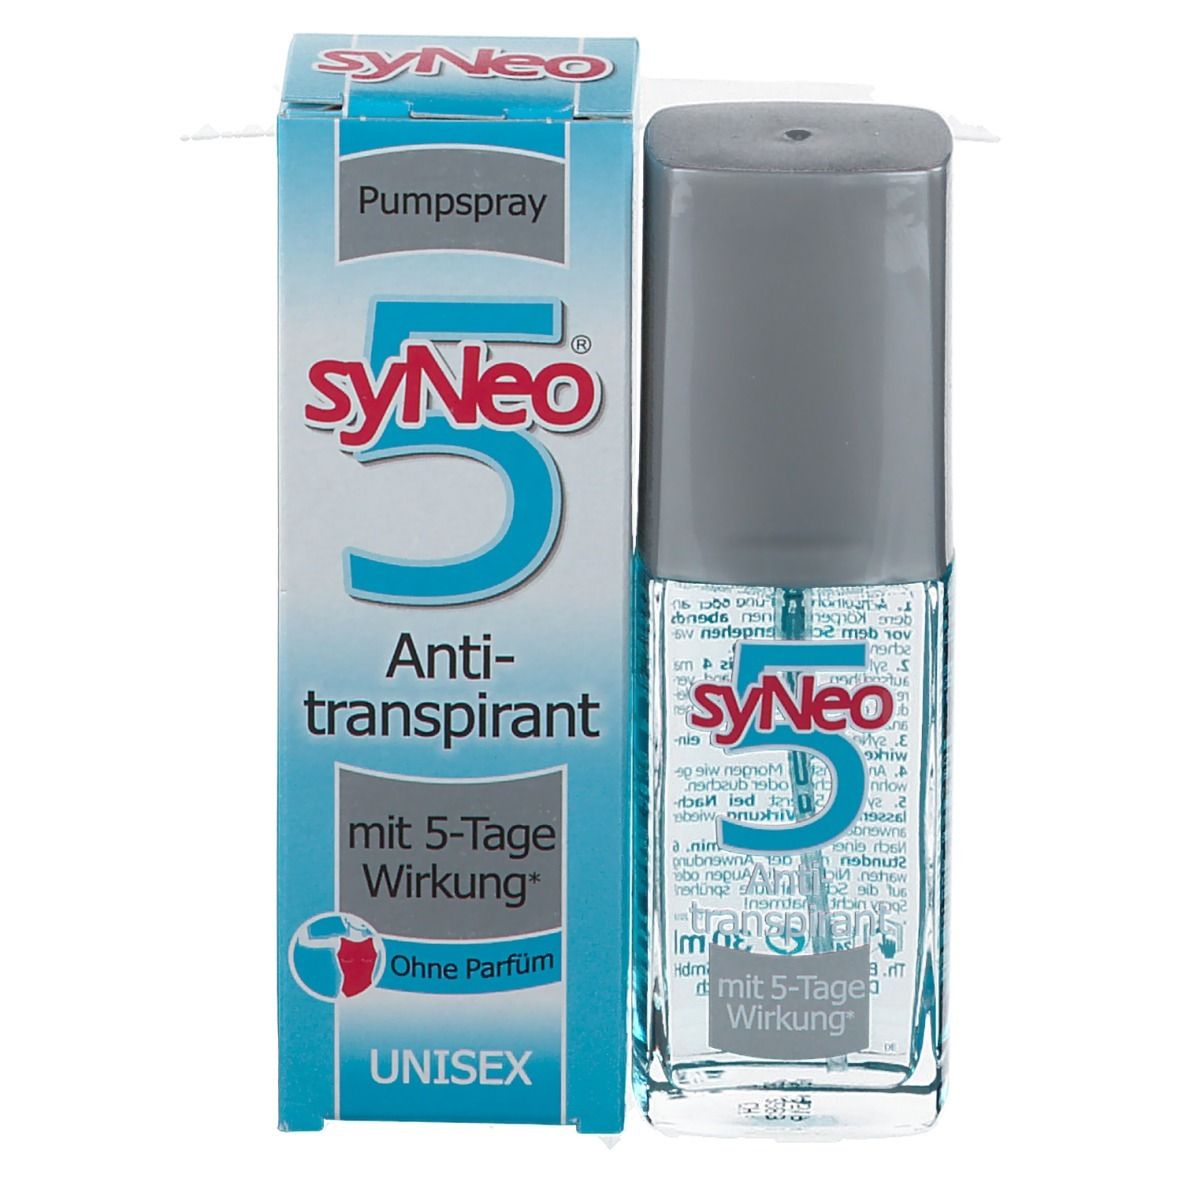 syNeo®5 Deo-Antitranspirant